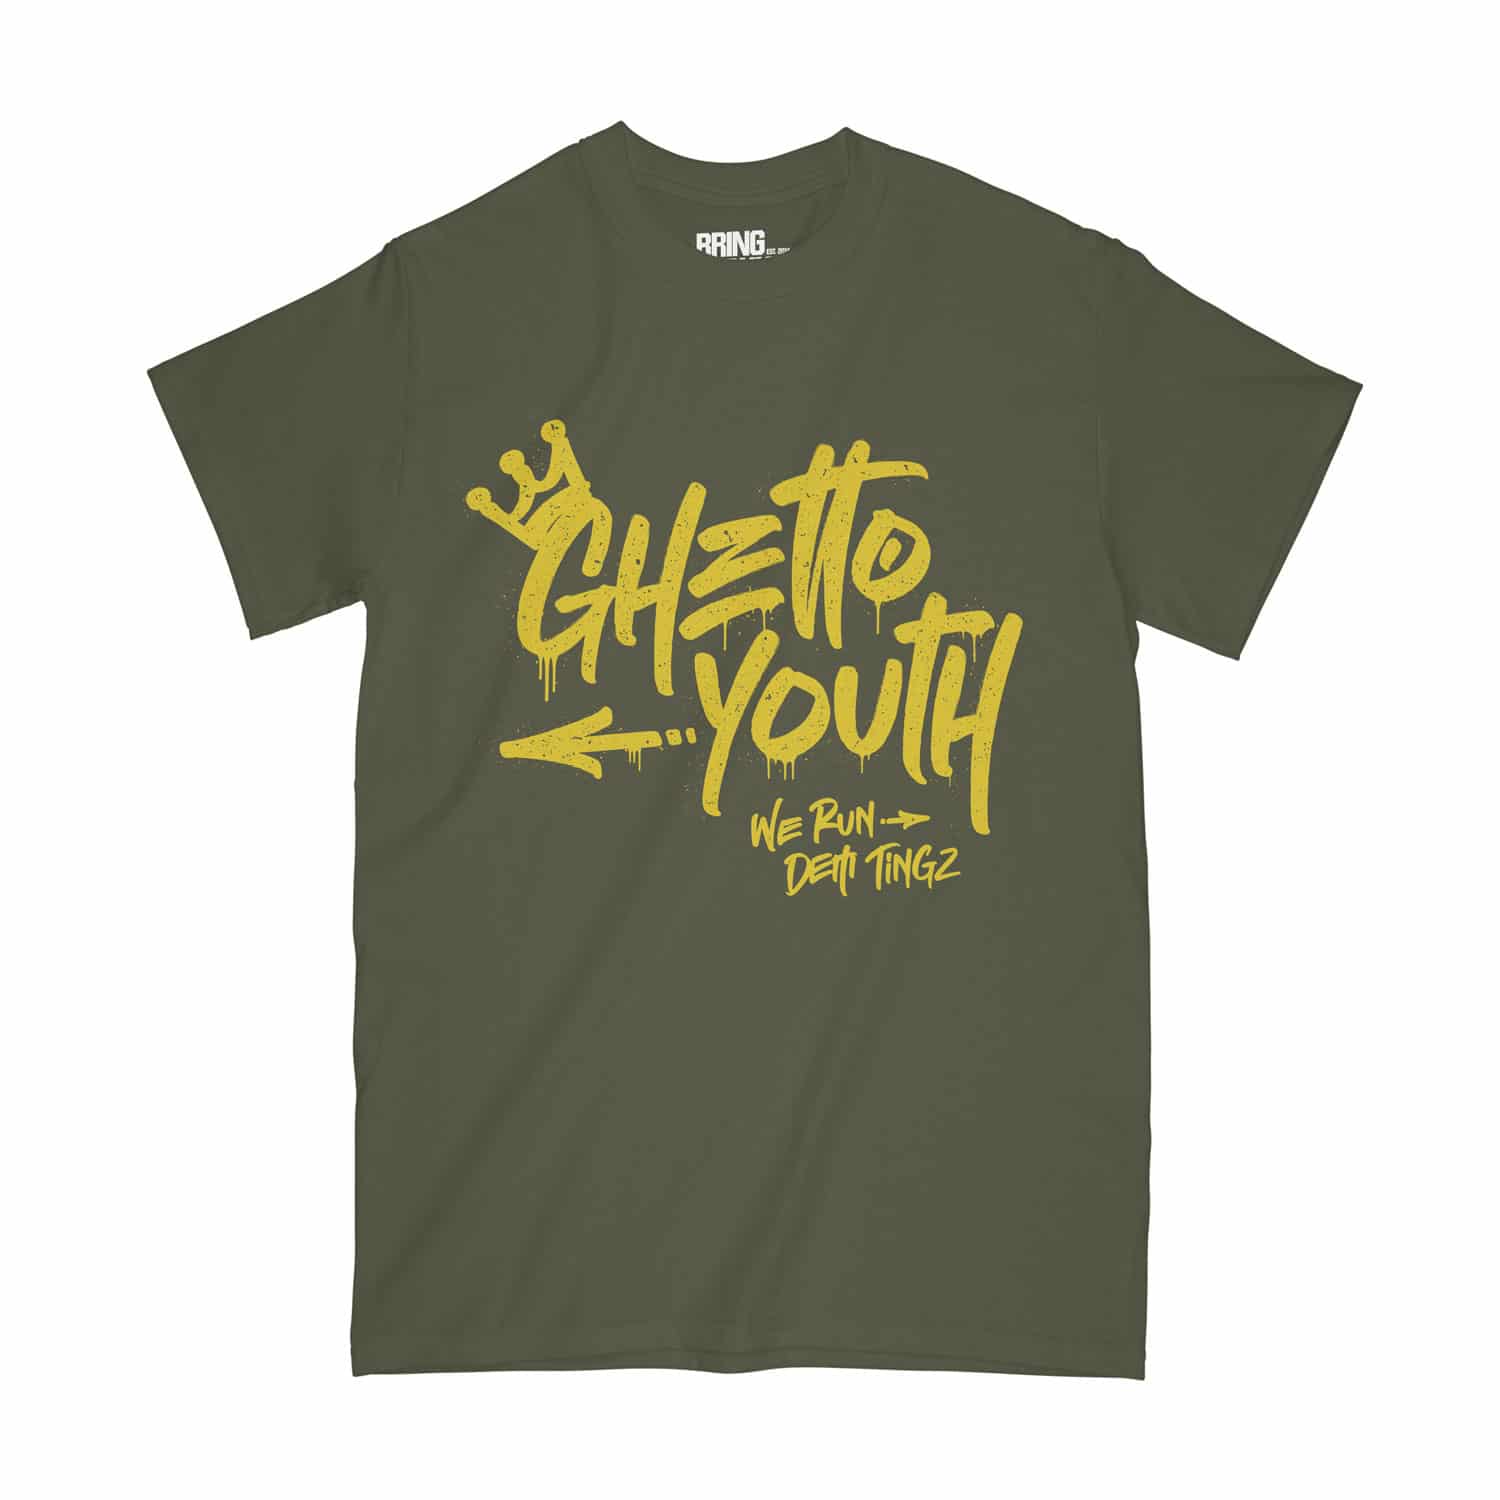 run tingz ghetto youth t-shirt mockup